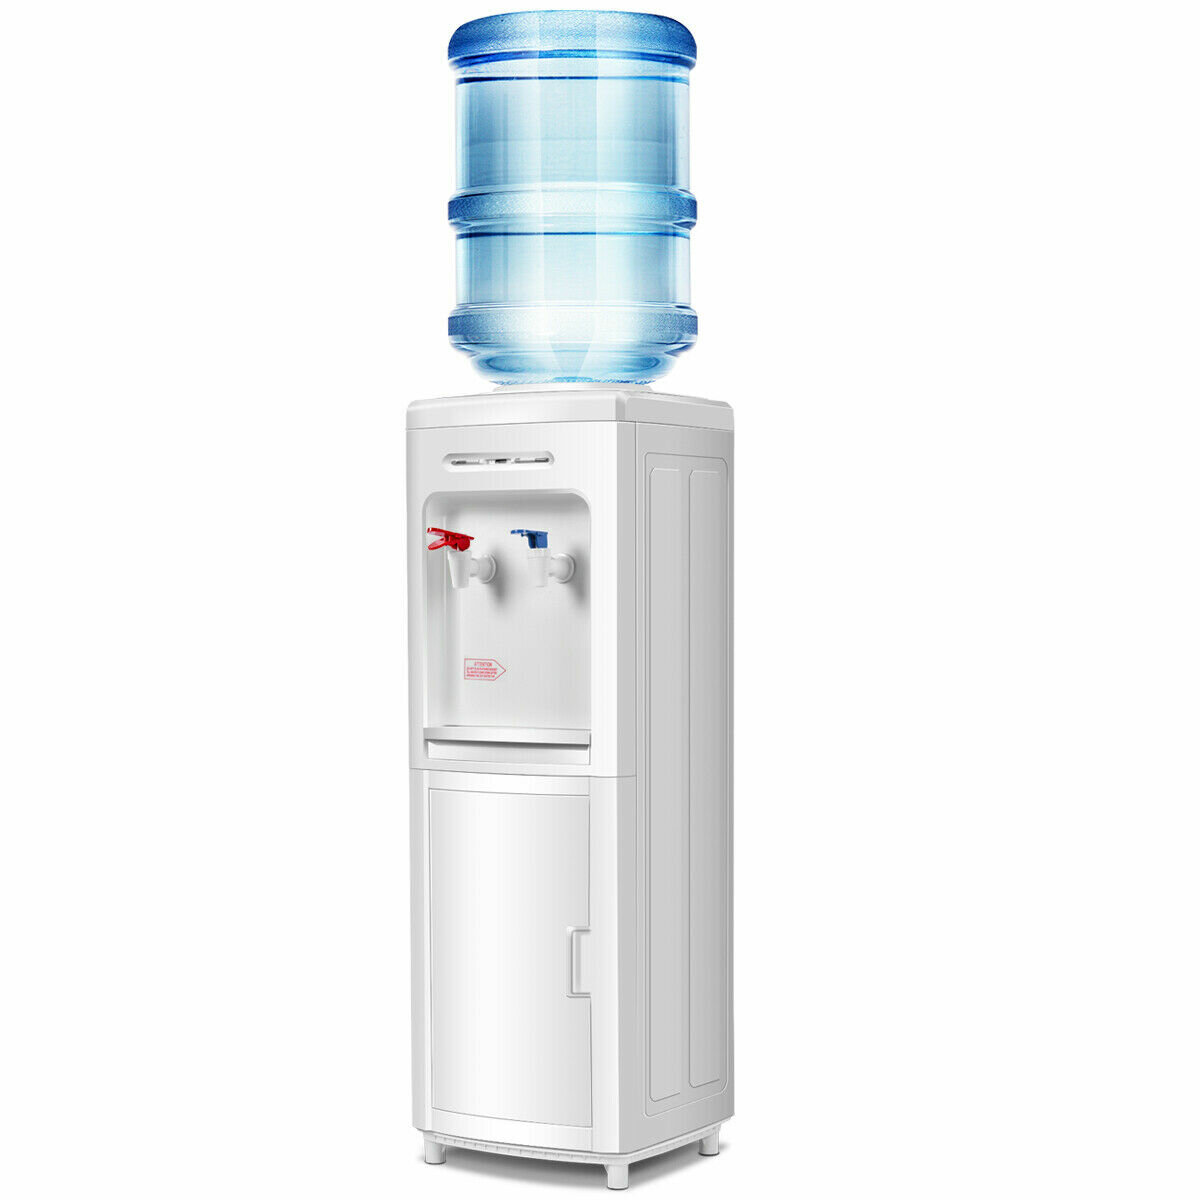 110V Electric Hot Cold Water Cooler Dispenser Desktop 3-5 Gallon Office Home Use